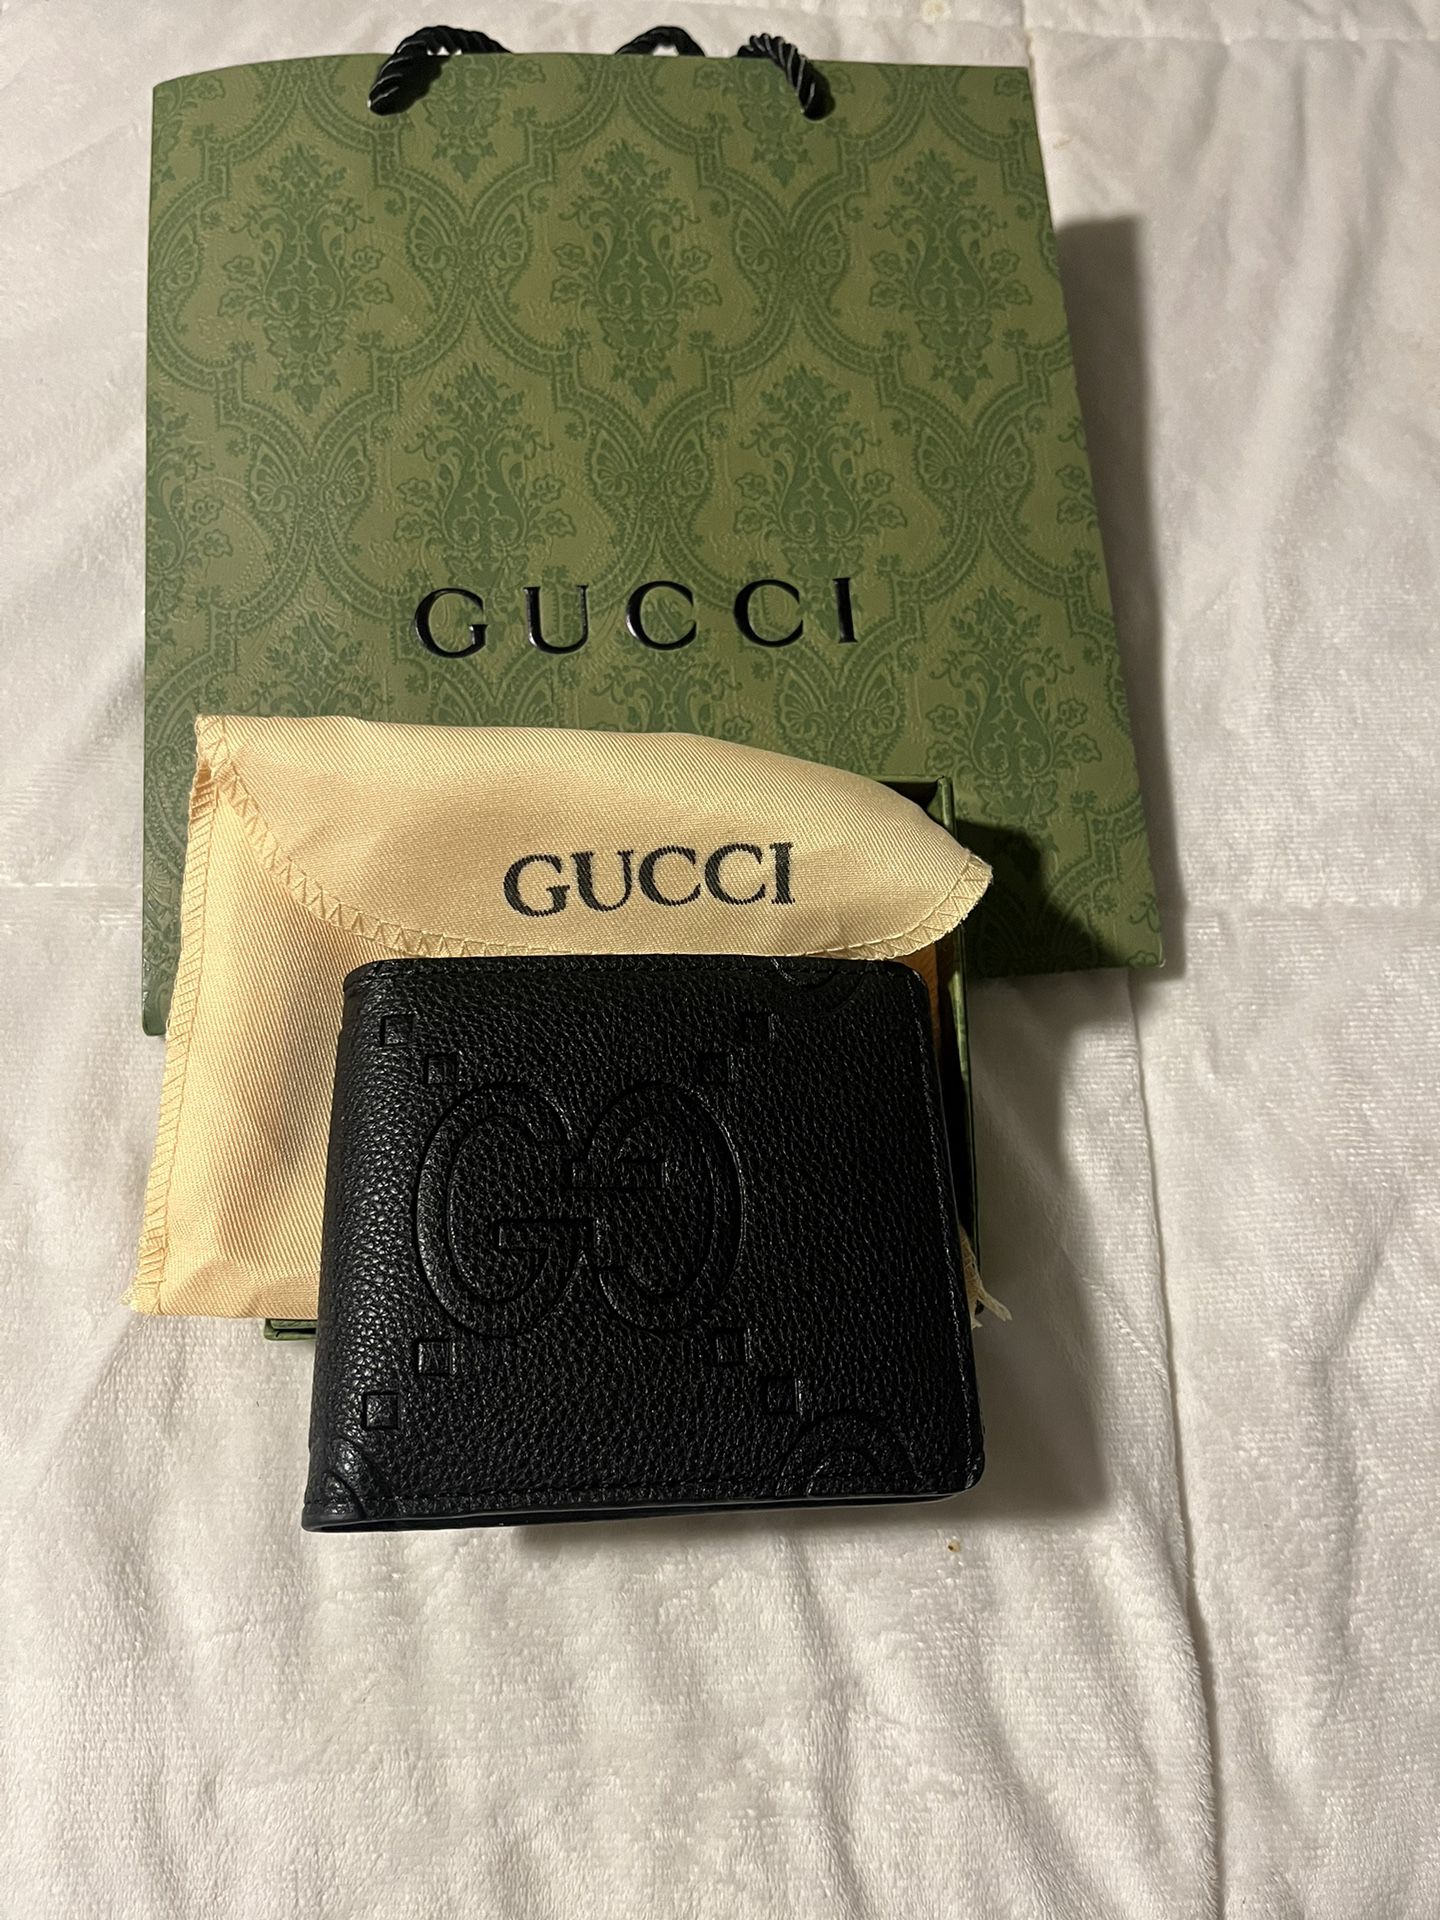 Gucci Mens Wallet Brand New 